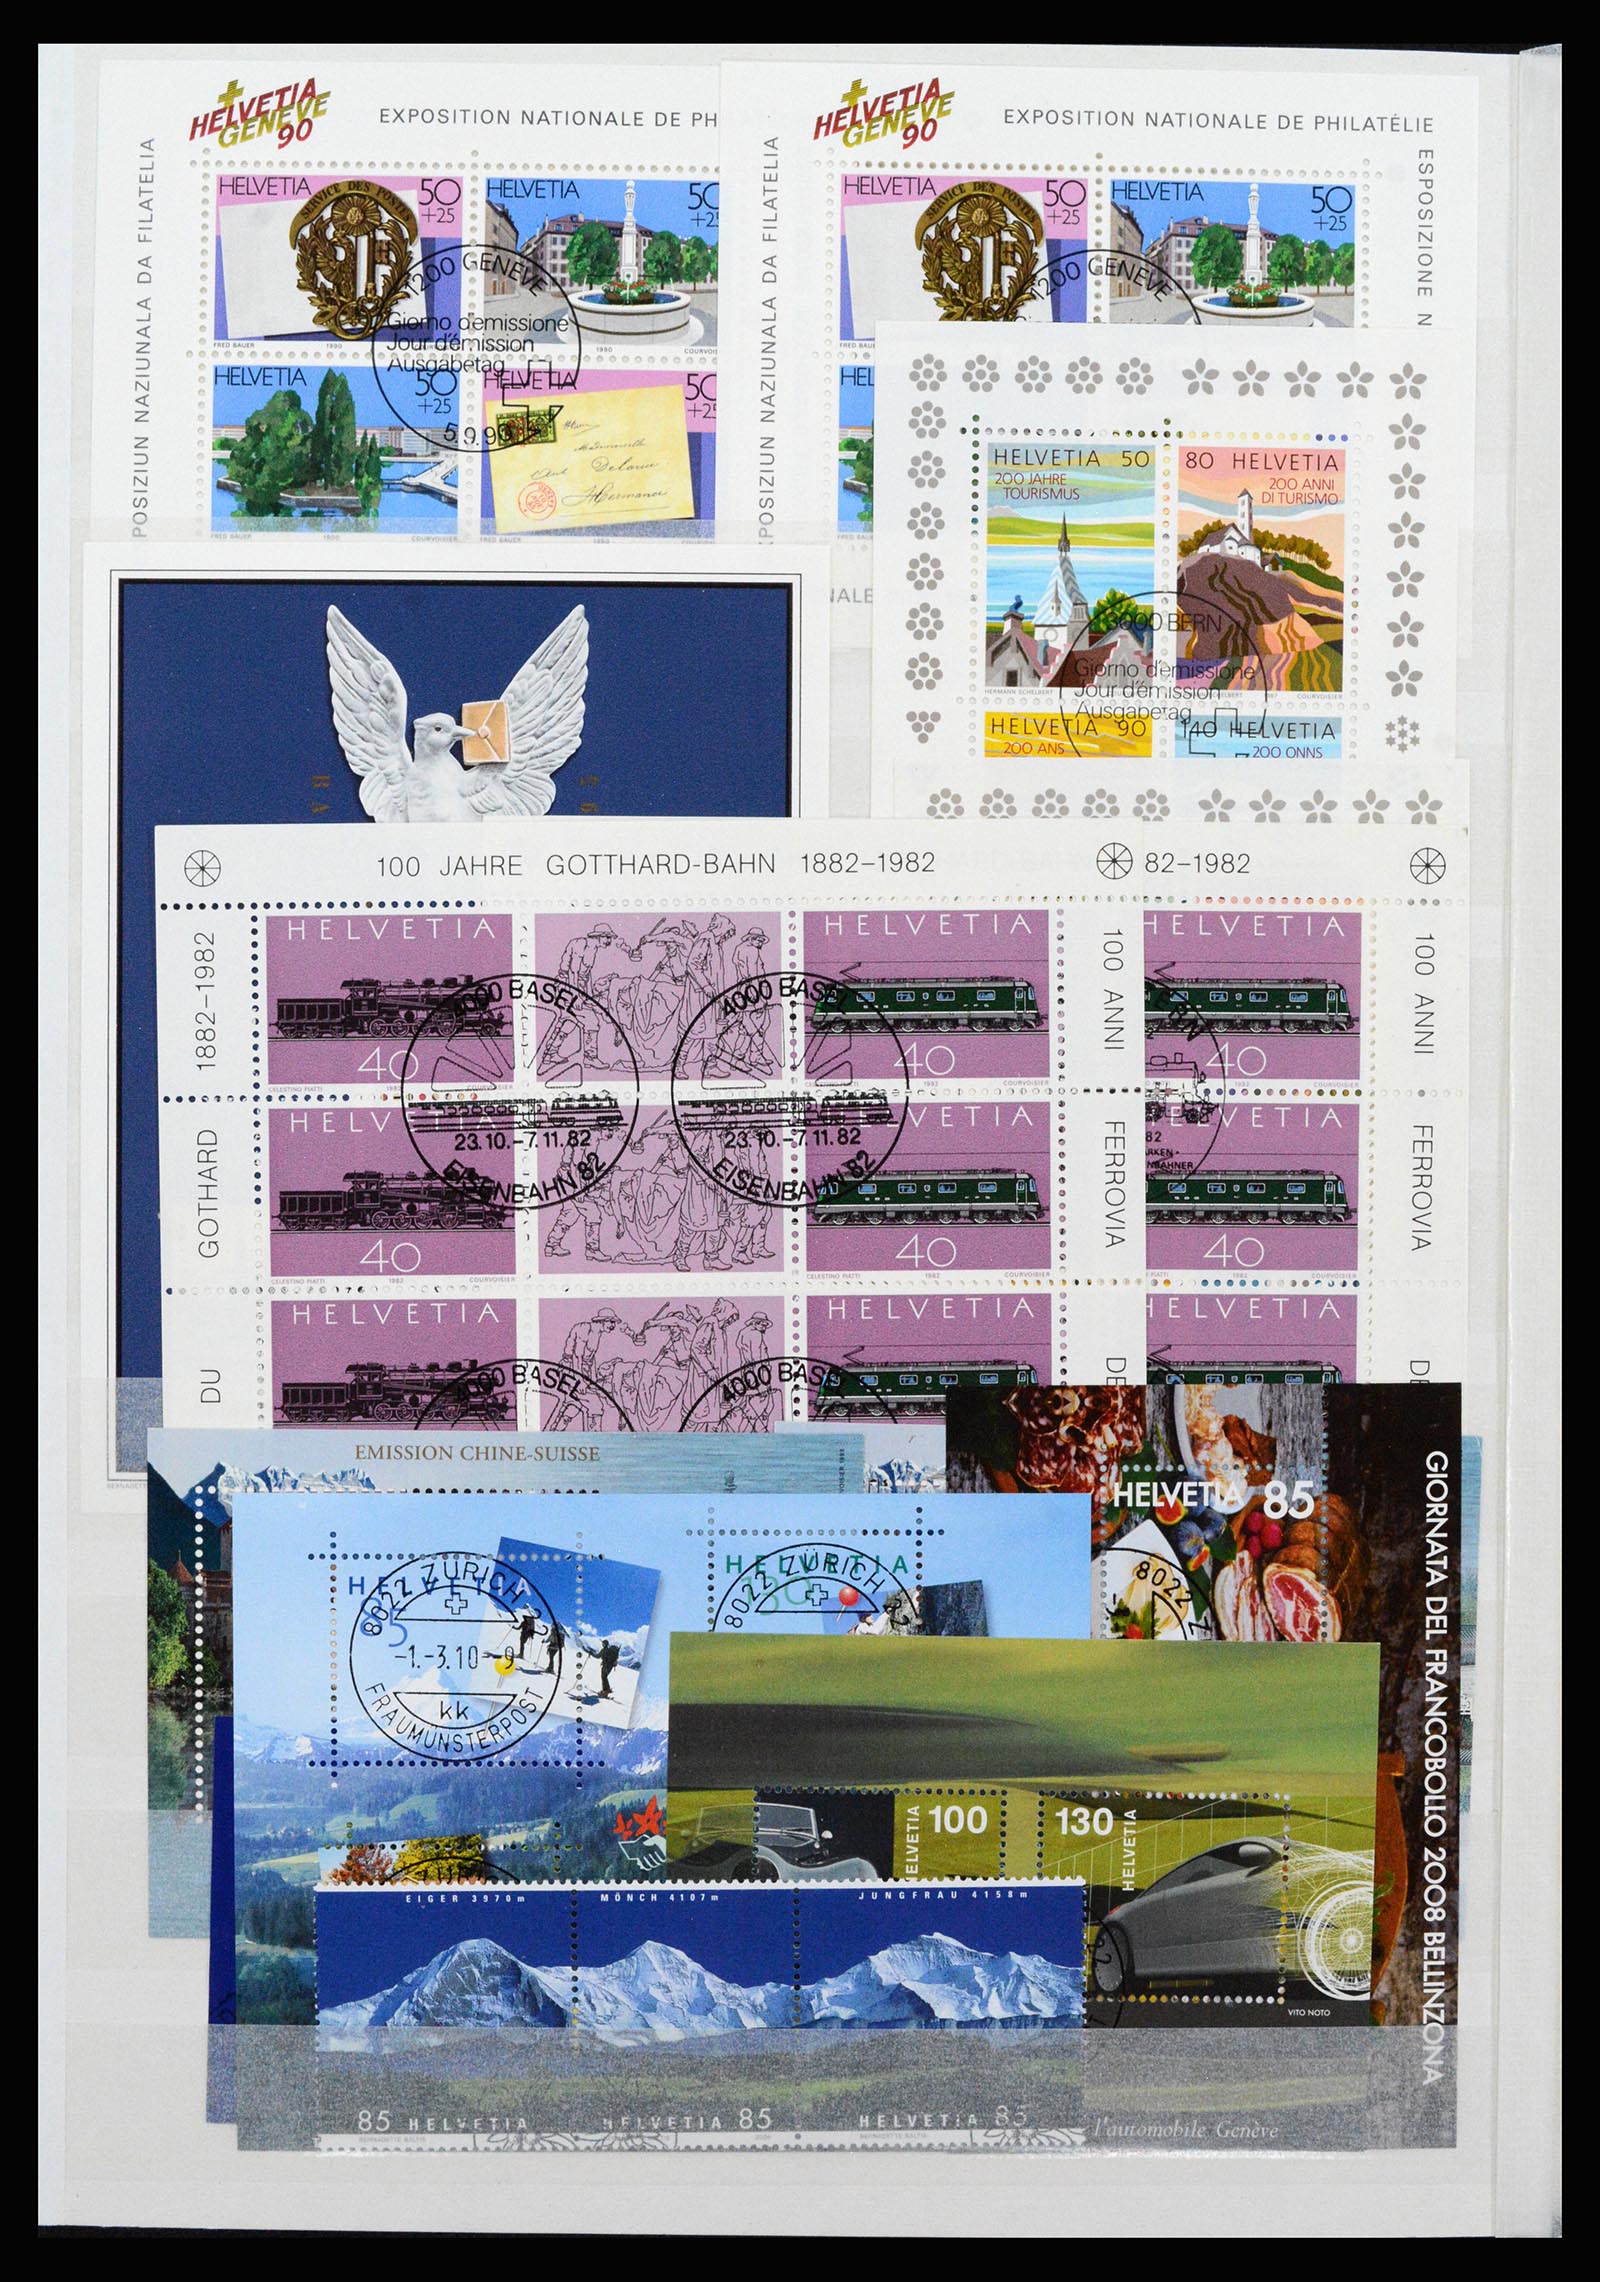 37252 059 - Stamp collection 37252 Switzerland 1900-2011.